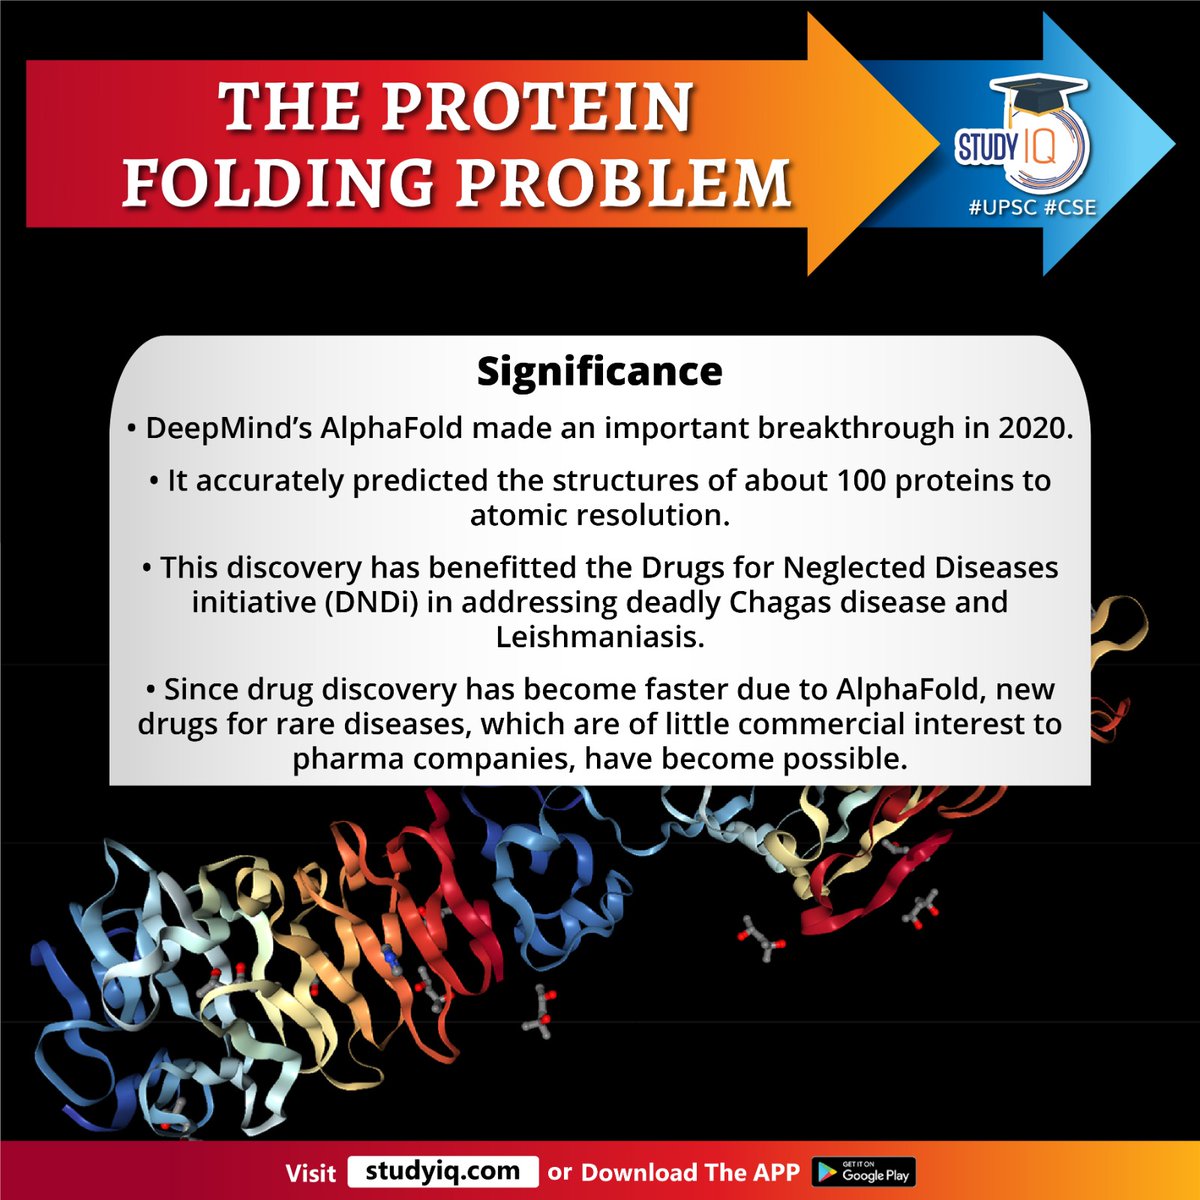 The Protein Folding Problem

#theproteinfoldingproblem #google #deepmind #proteinfoldingproblem #proteins #problematic #typicalprotein #alphafold #neglecteddiseasesinitiative #dndi #leishmaniasis #commericalinterest #pharmacompanies #upsc #cse #ips #ias